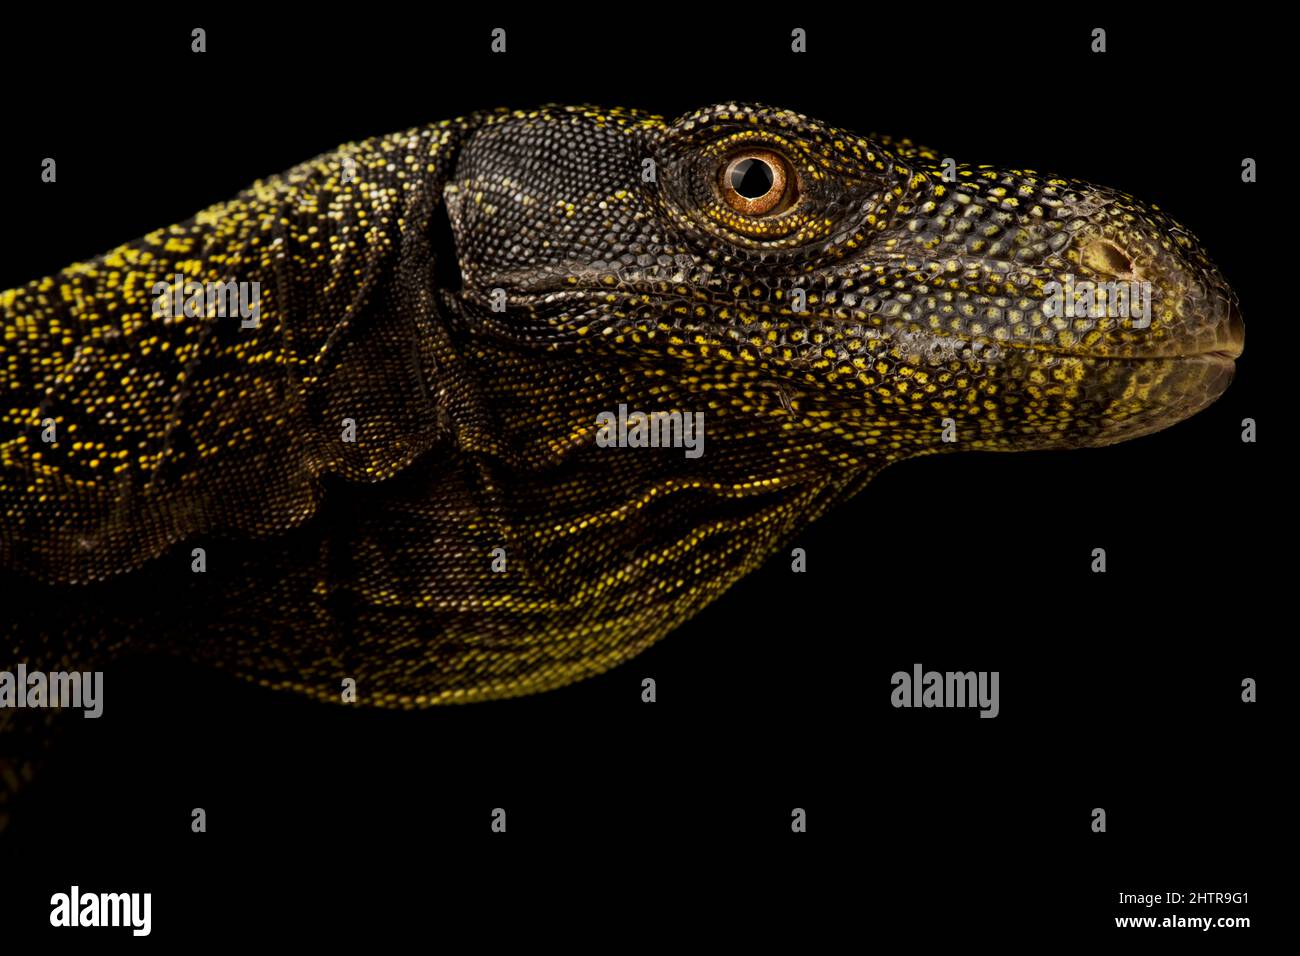 Monitor de cocodrilo (Varanus salvatorii) Foto de stock